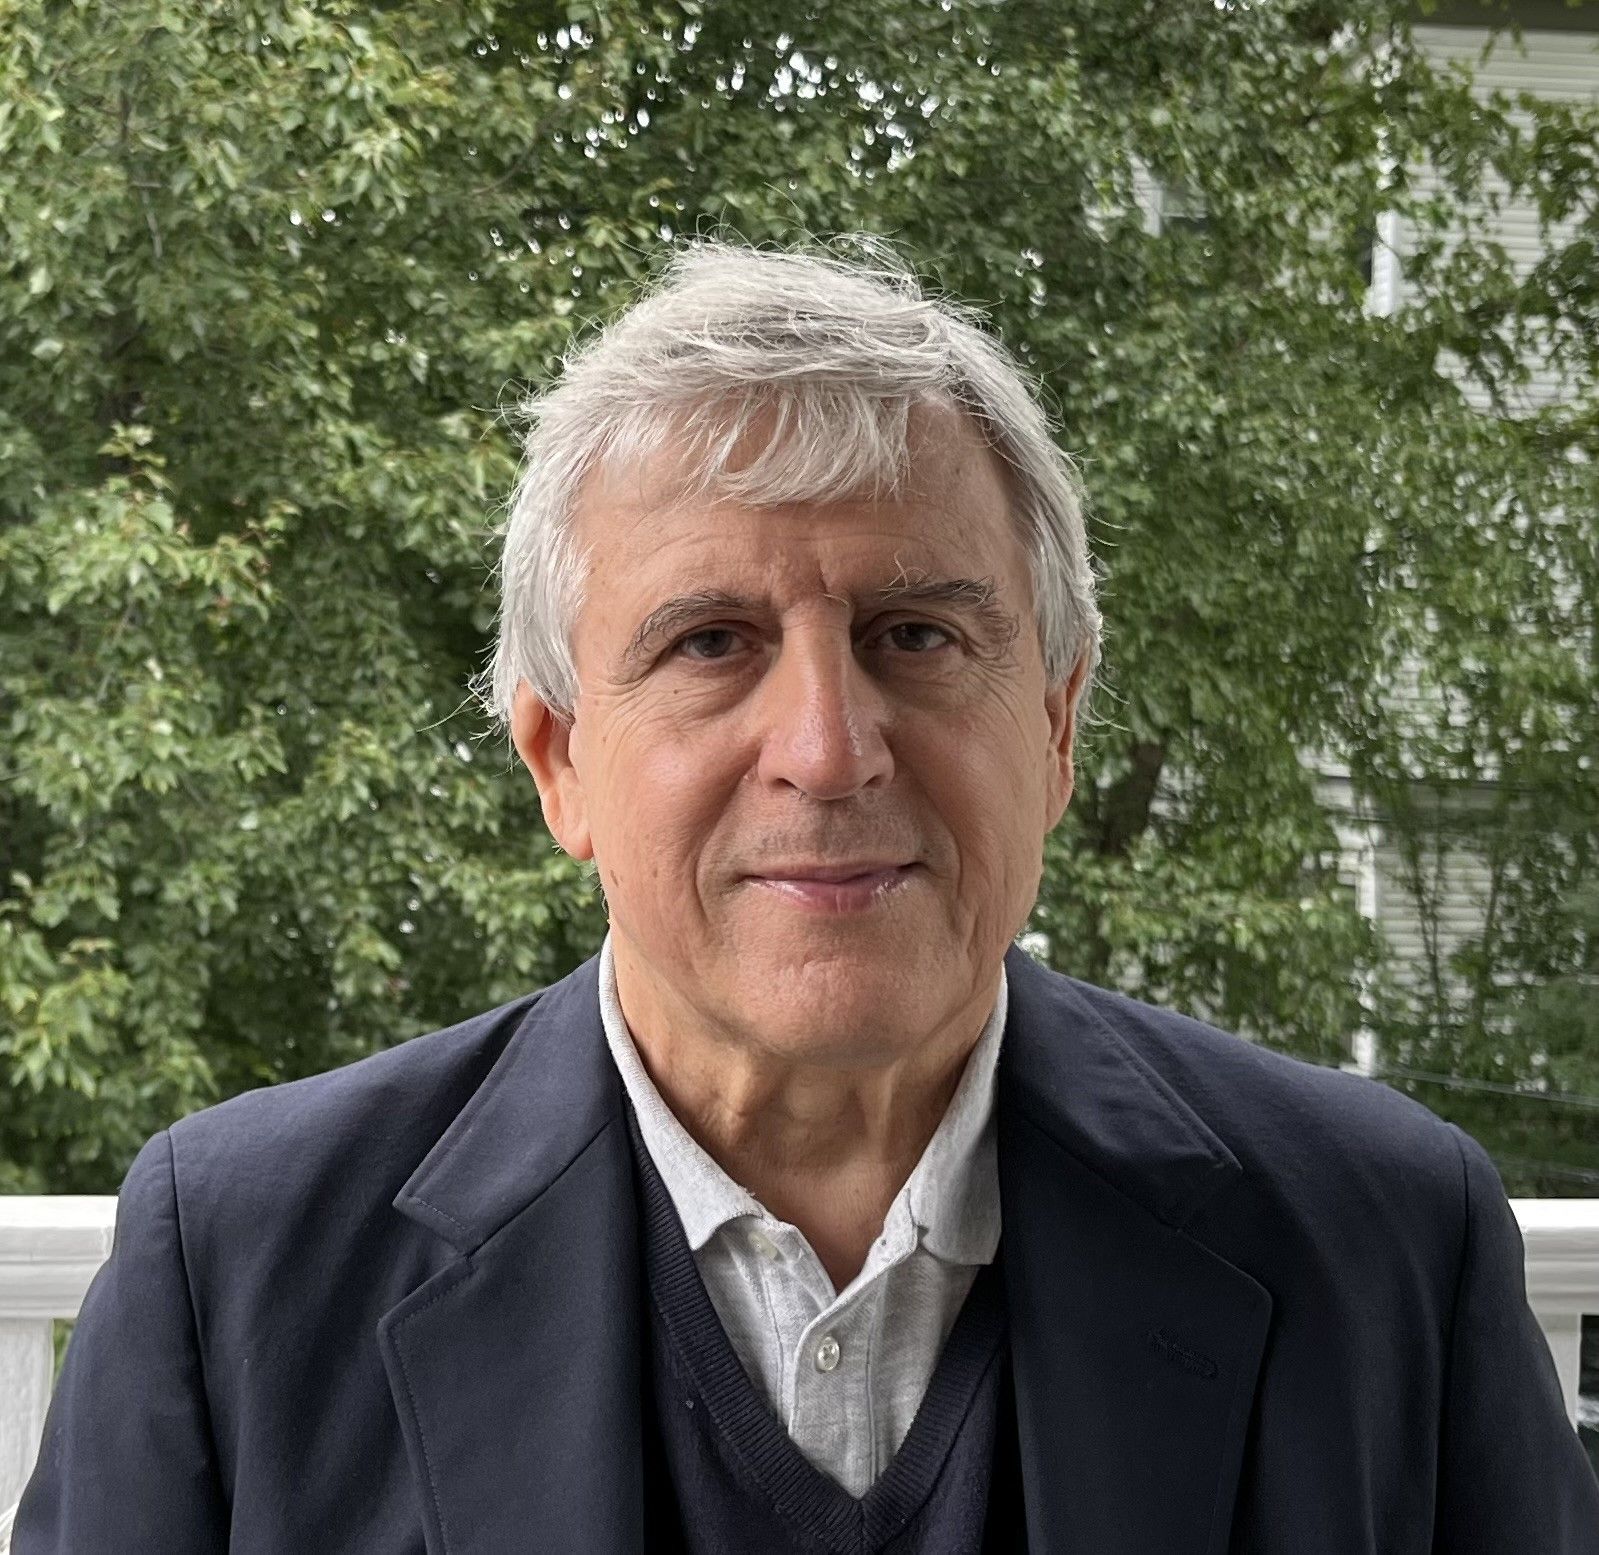 Profesor José López Barneo, Psychology Professor Instituto de Biomedicina de Sevilla (IBiS)